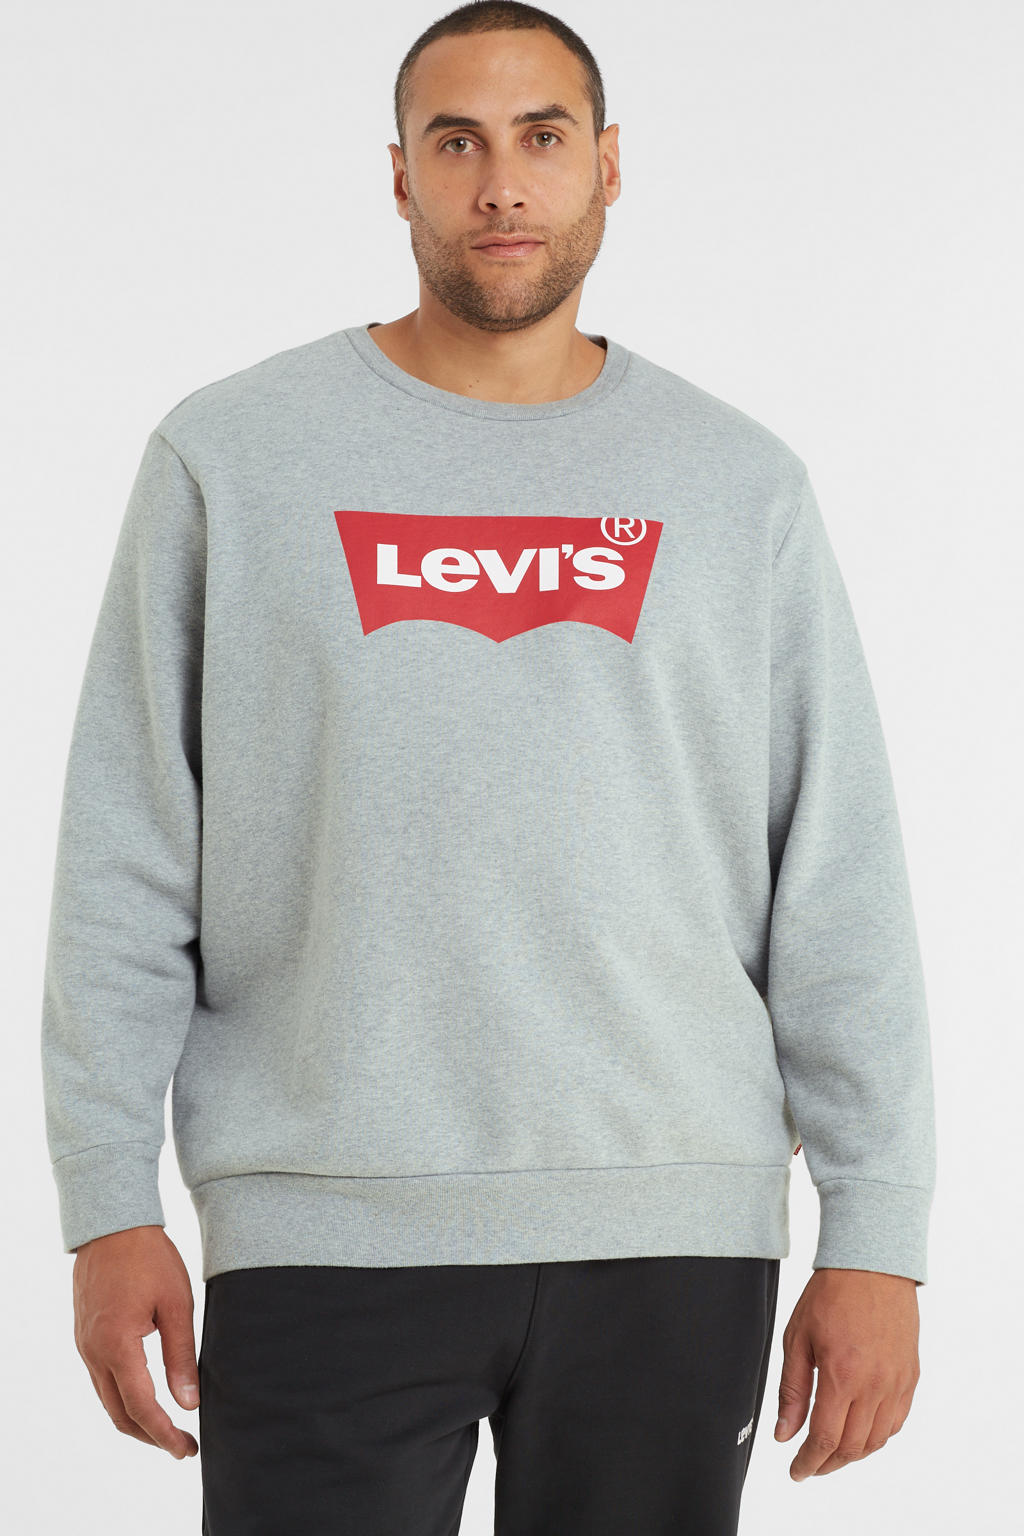 Levi's Big and Tall sweater Plus Size met logo grijs melange